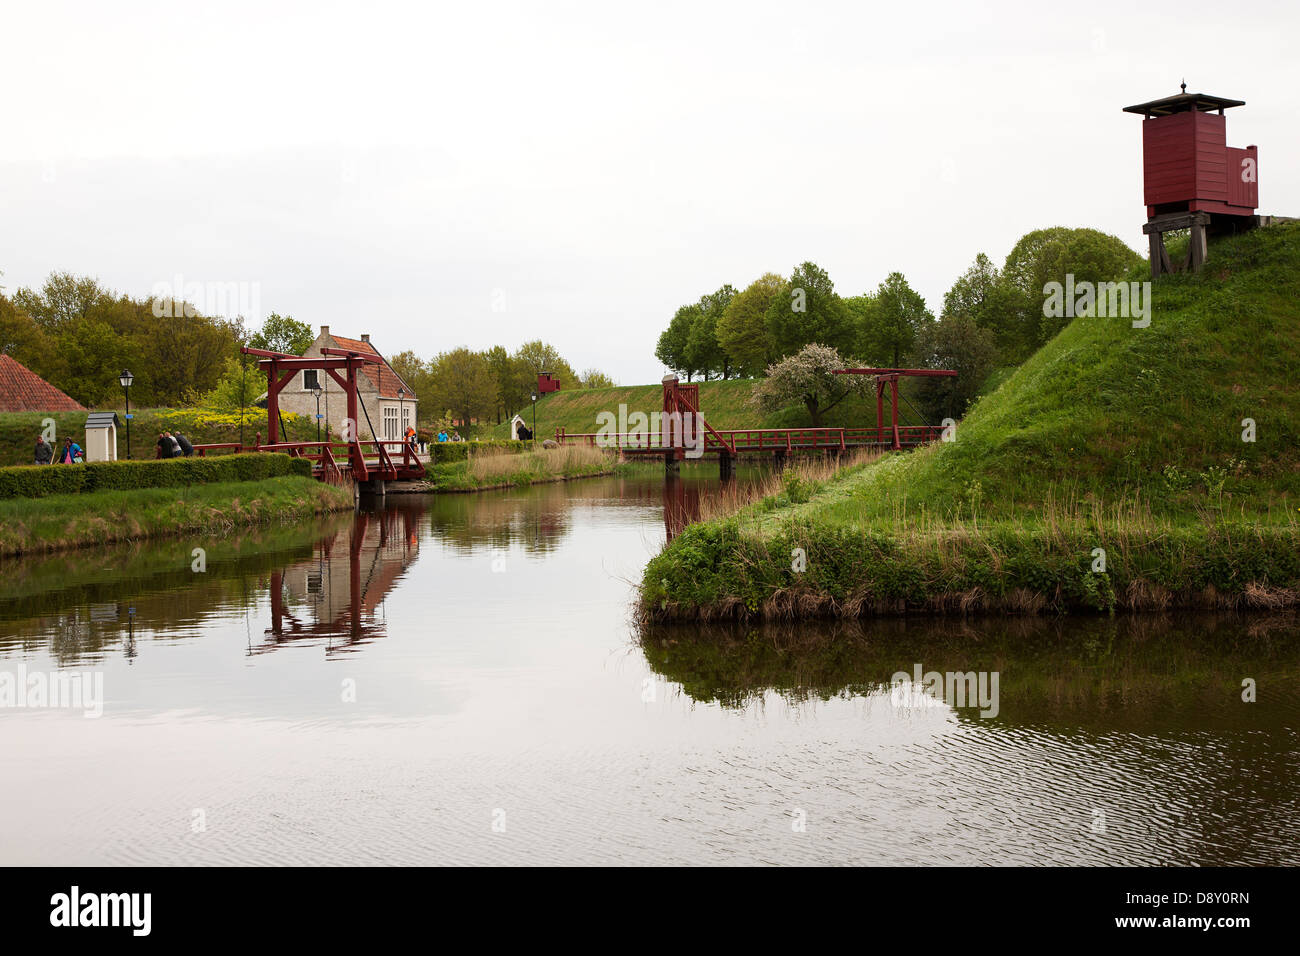 Defenses and entrance bridge of village Fortress Bourtange, Groningen, The Netherlands Stock Photo